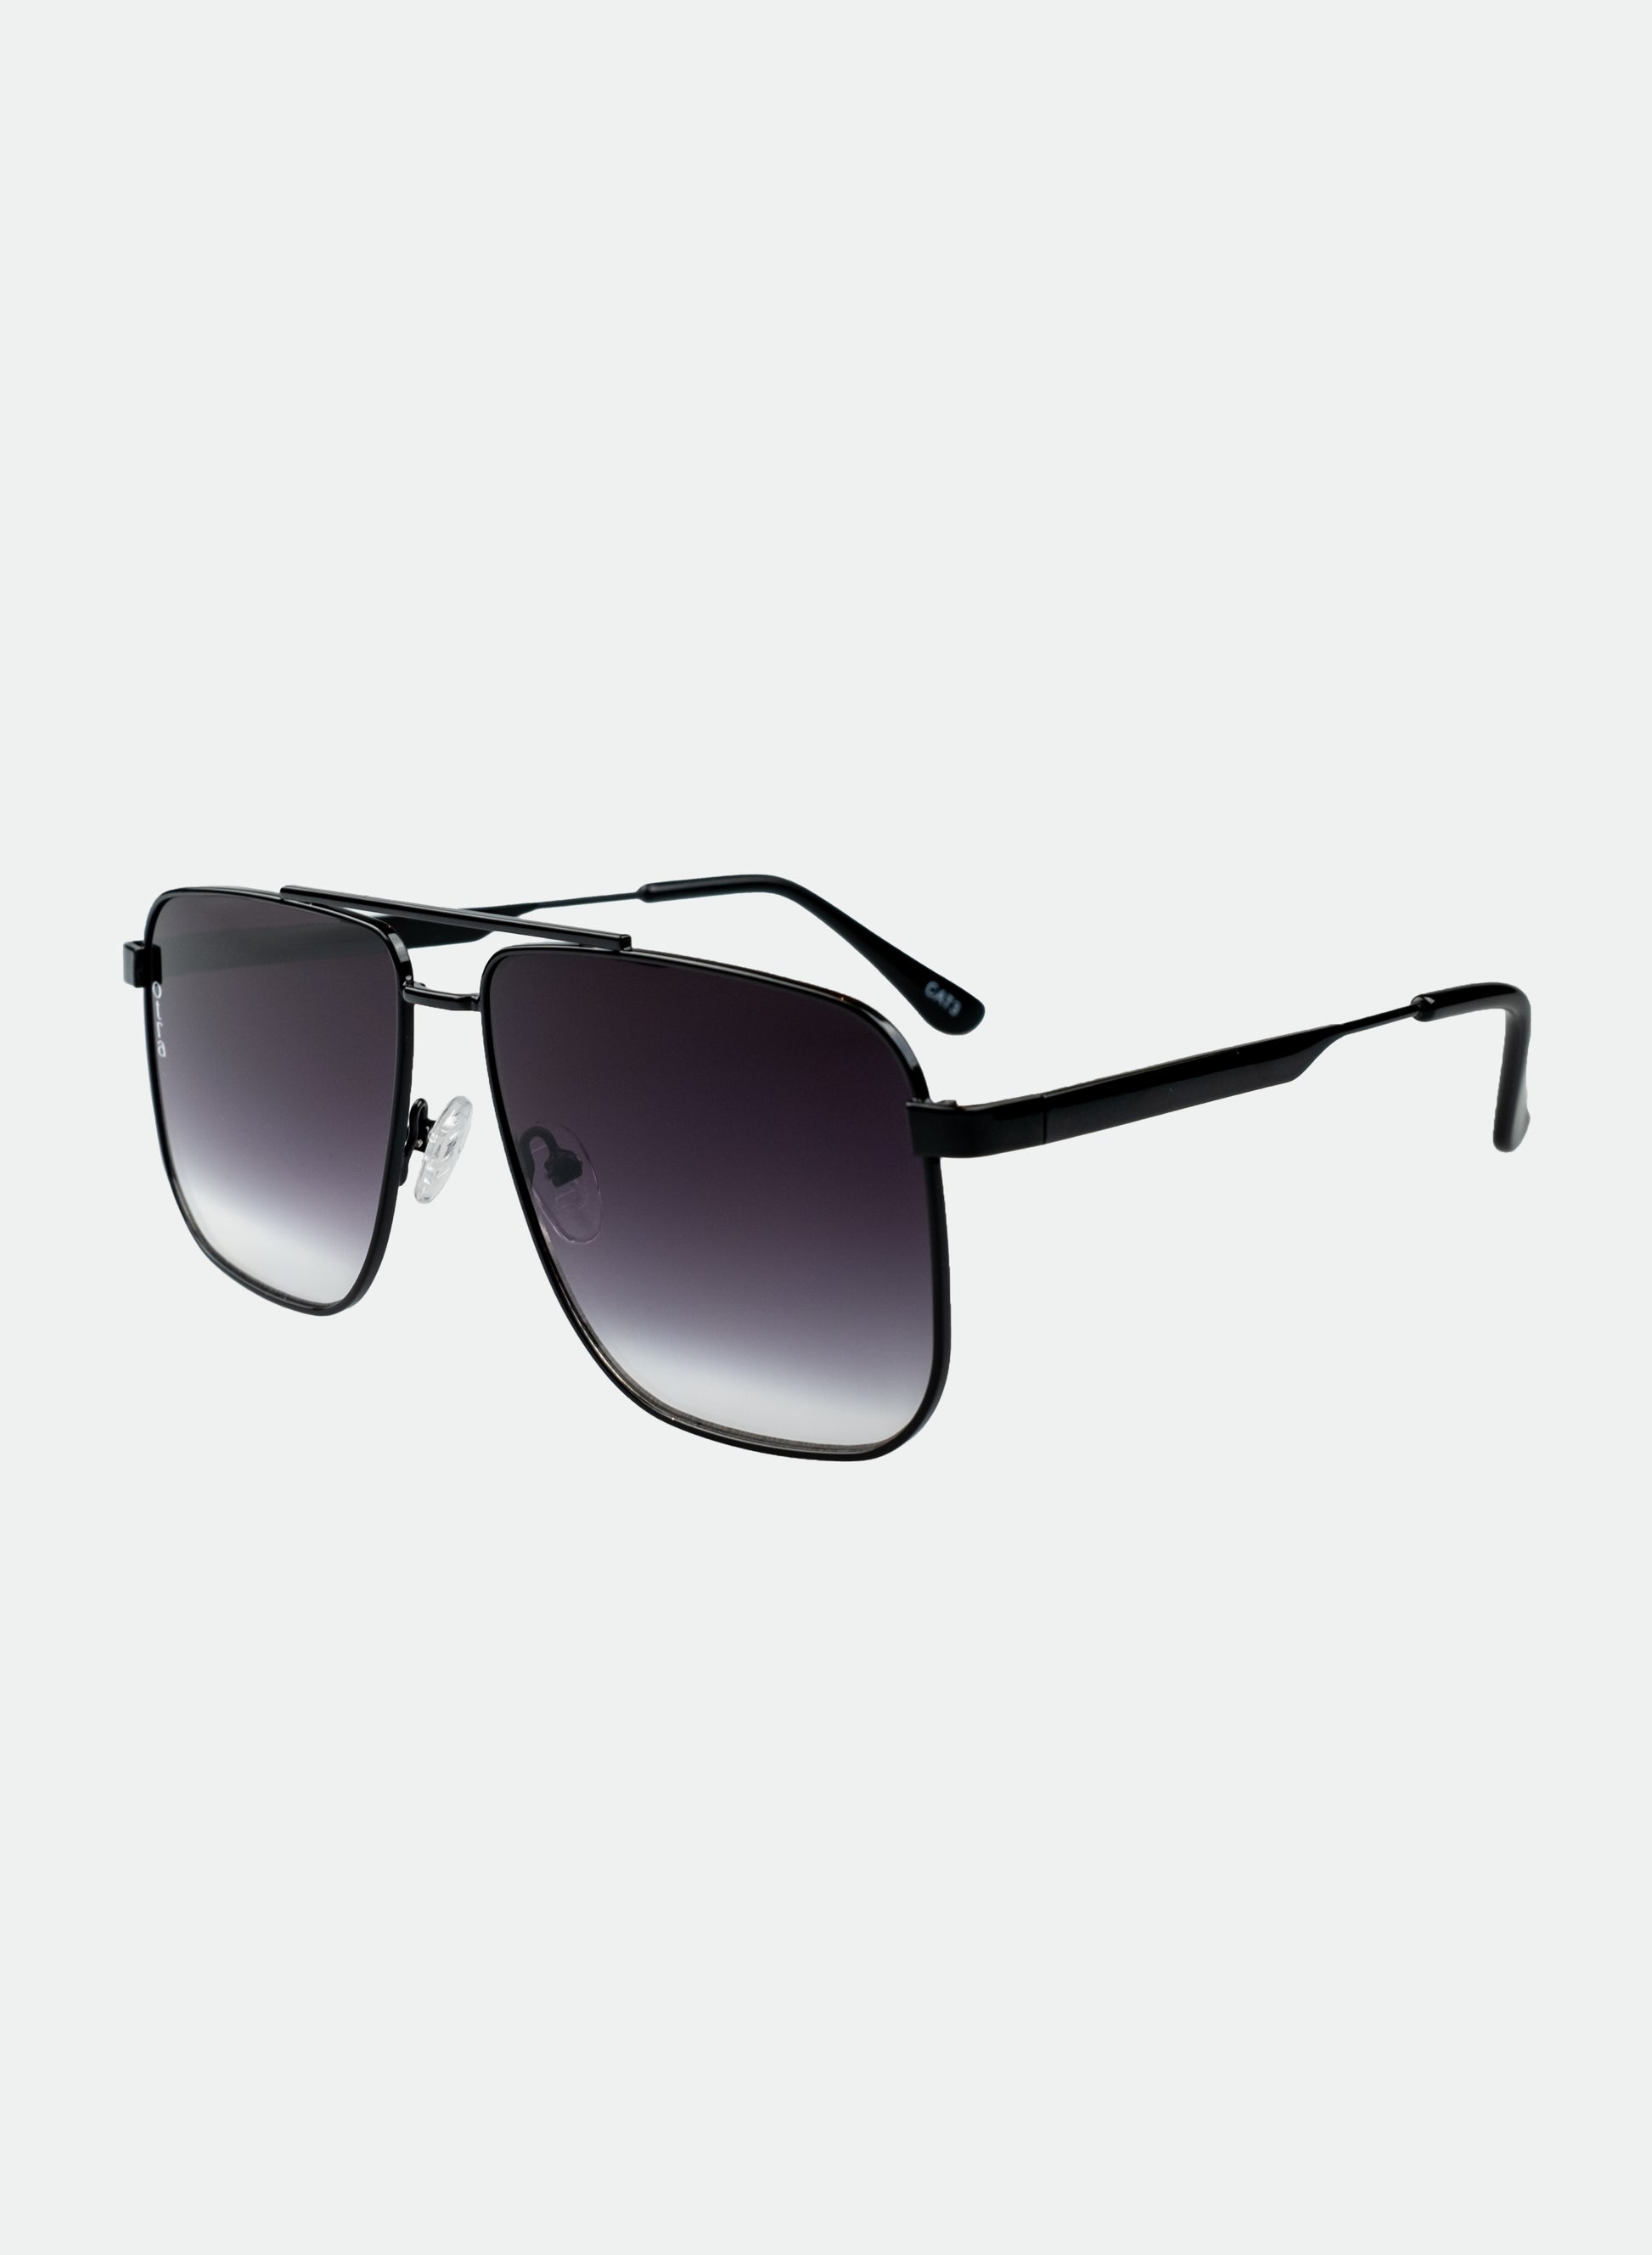 Sorrento sunglasses in black fade side view